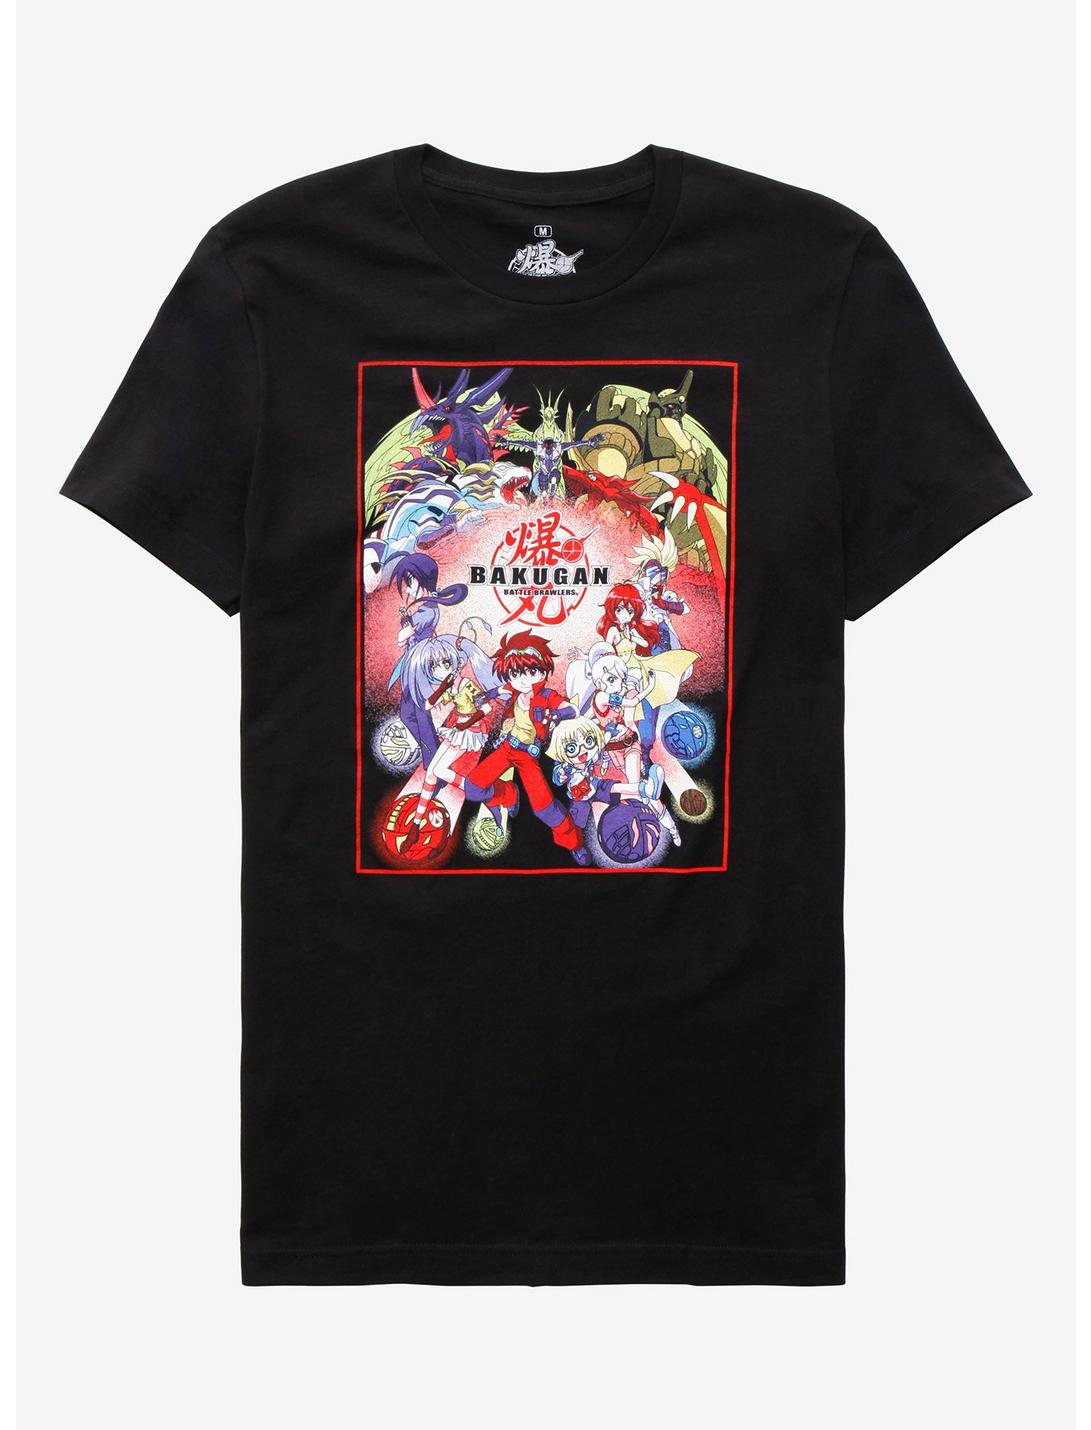 Bakugan Battle Brawlers Poster T-Shirt, BLACK, hi-res